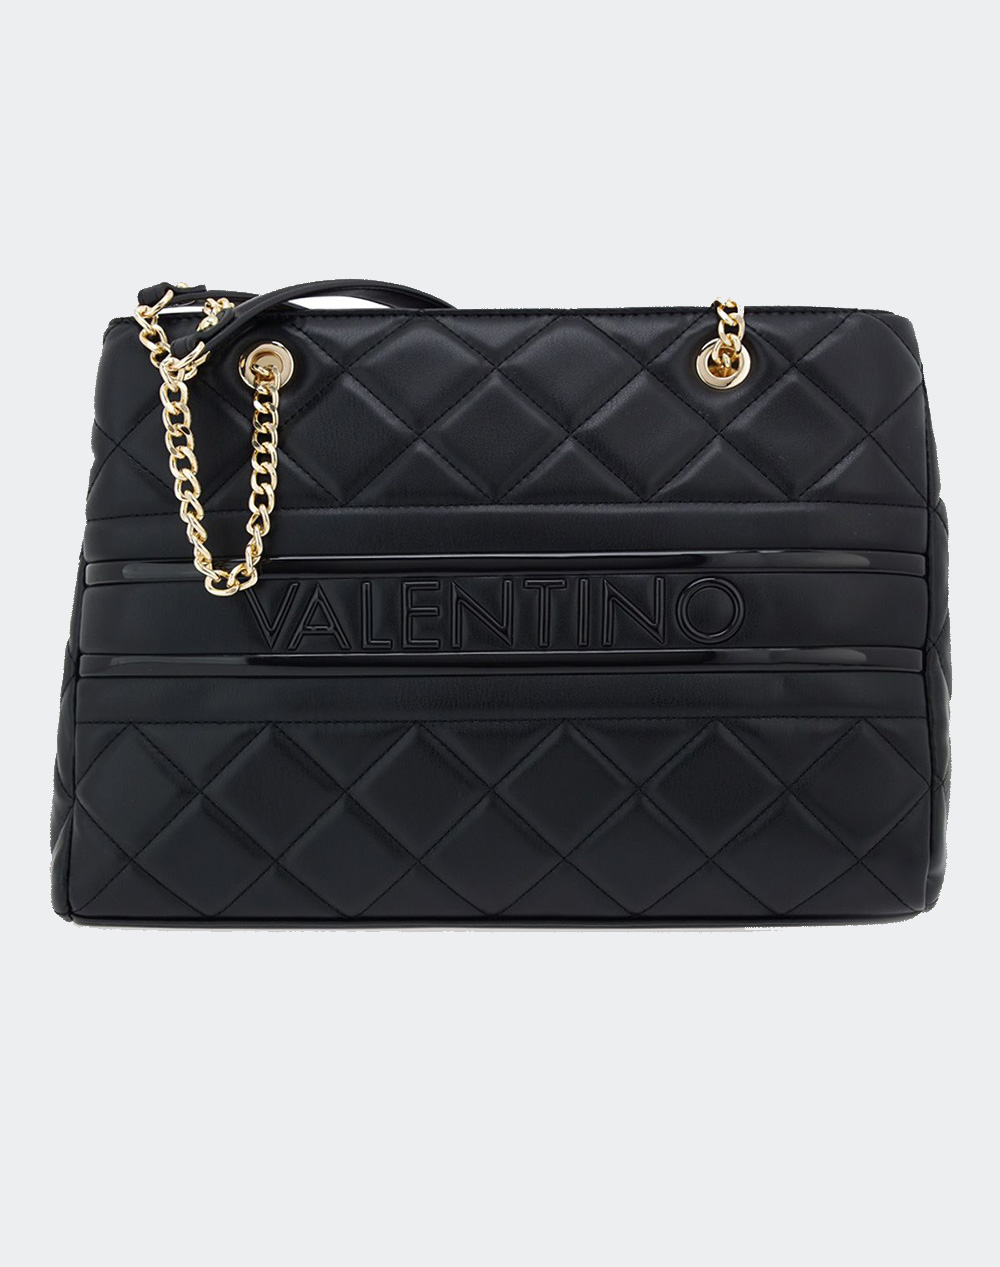 Valentino Women's Ada Quilted Handbag